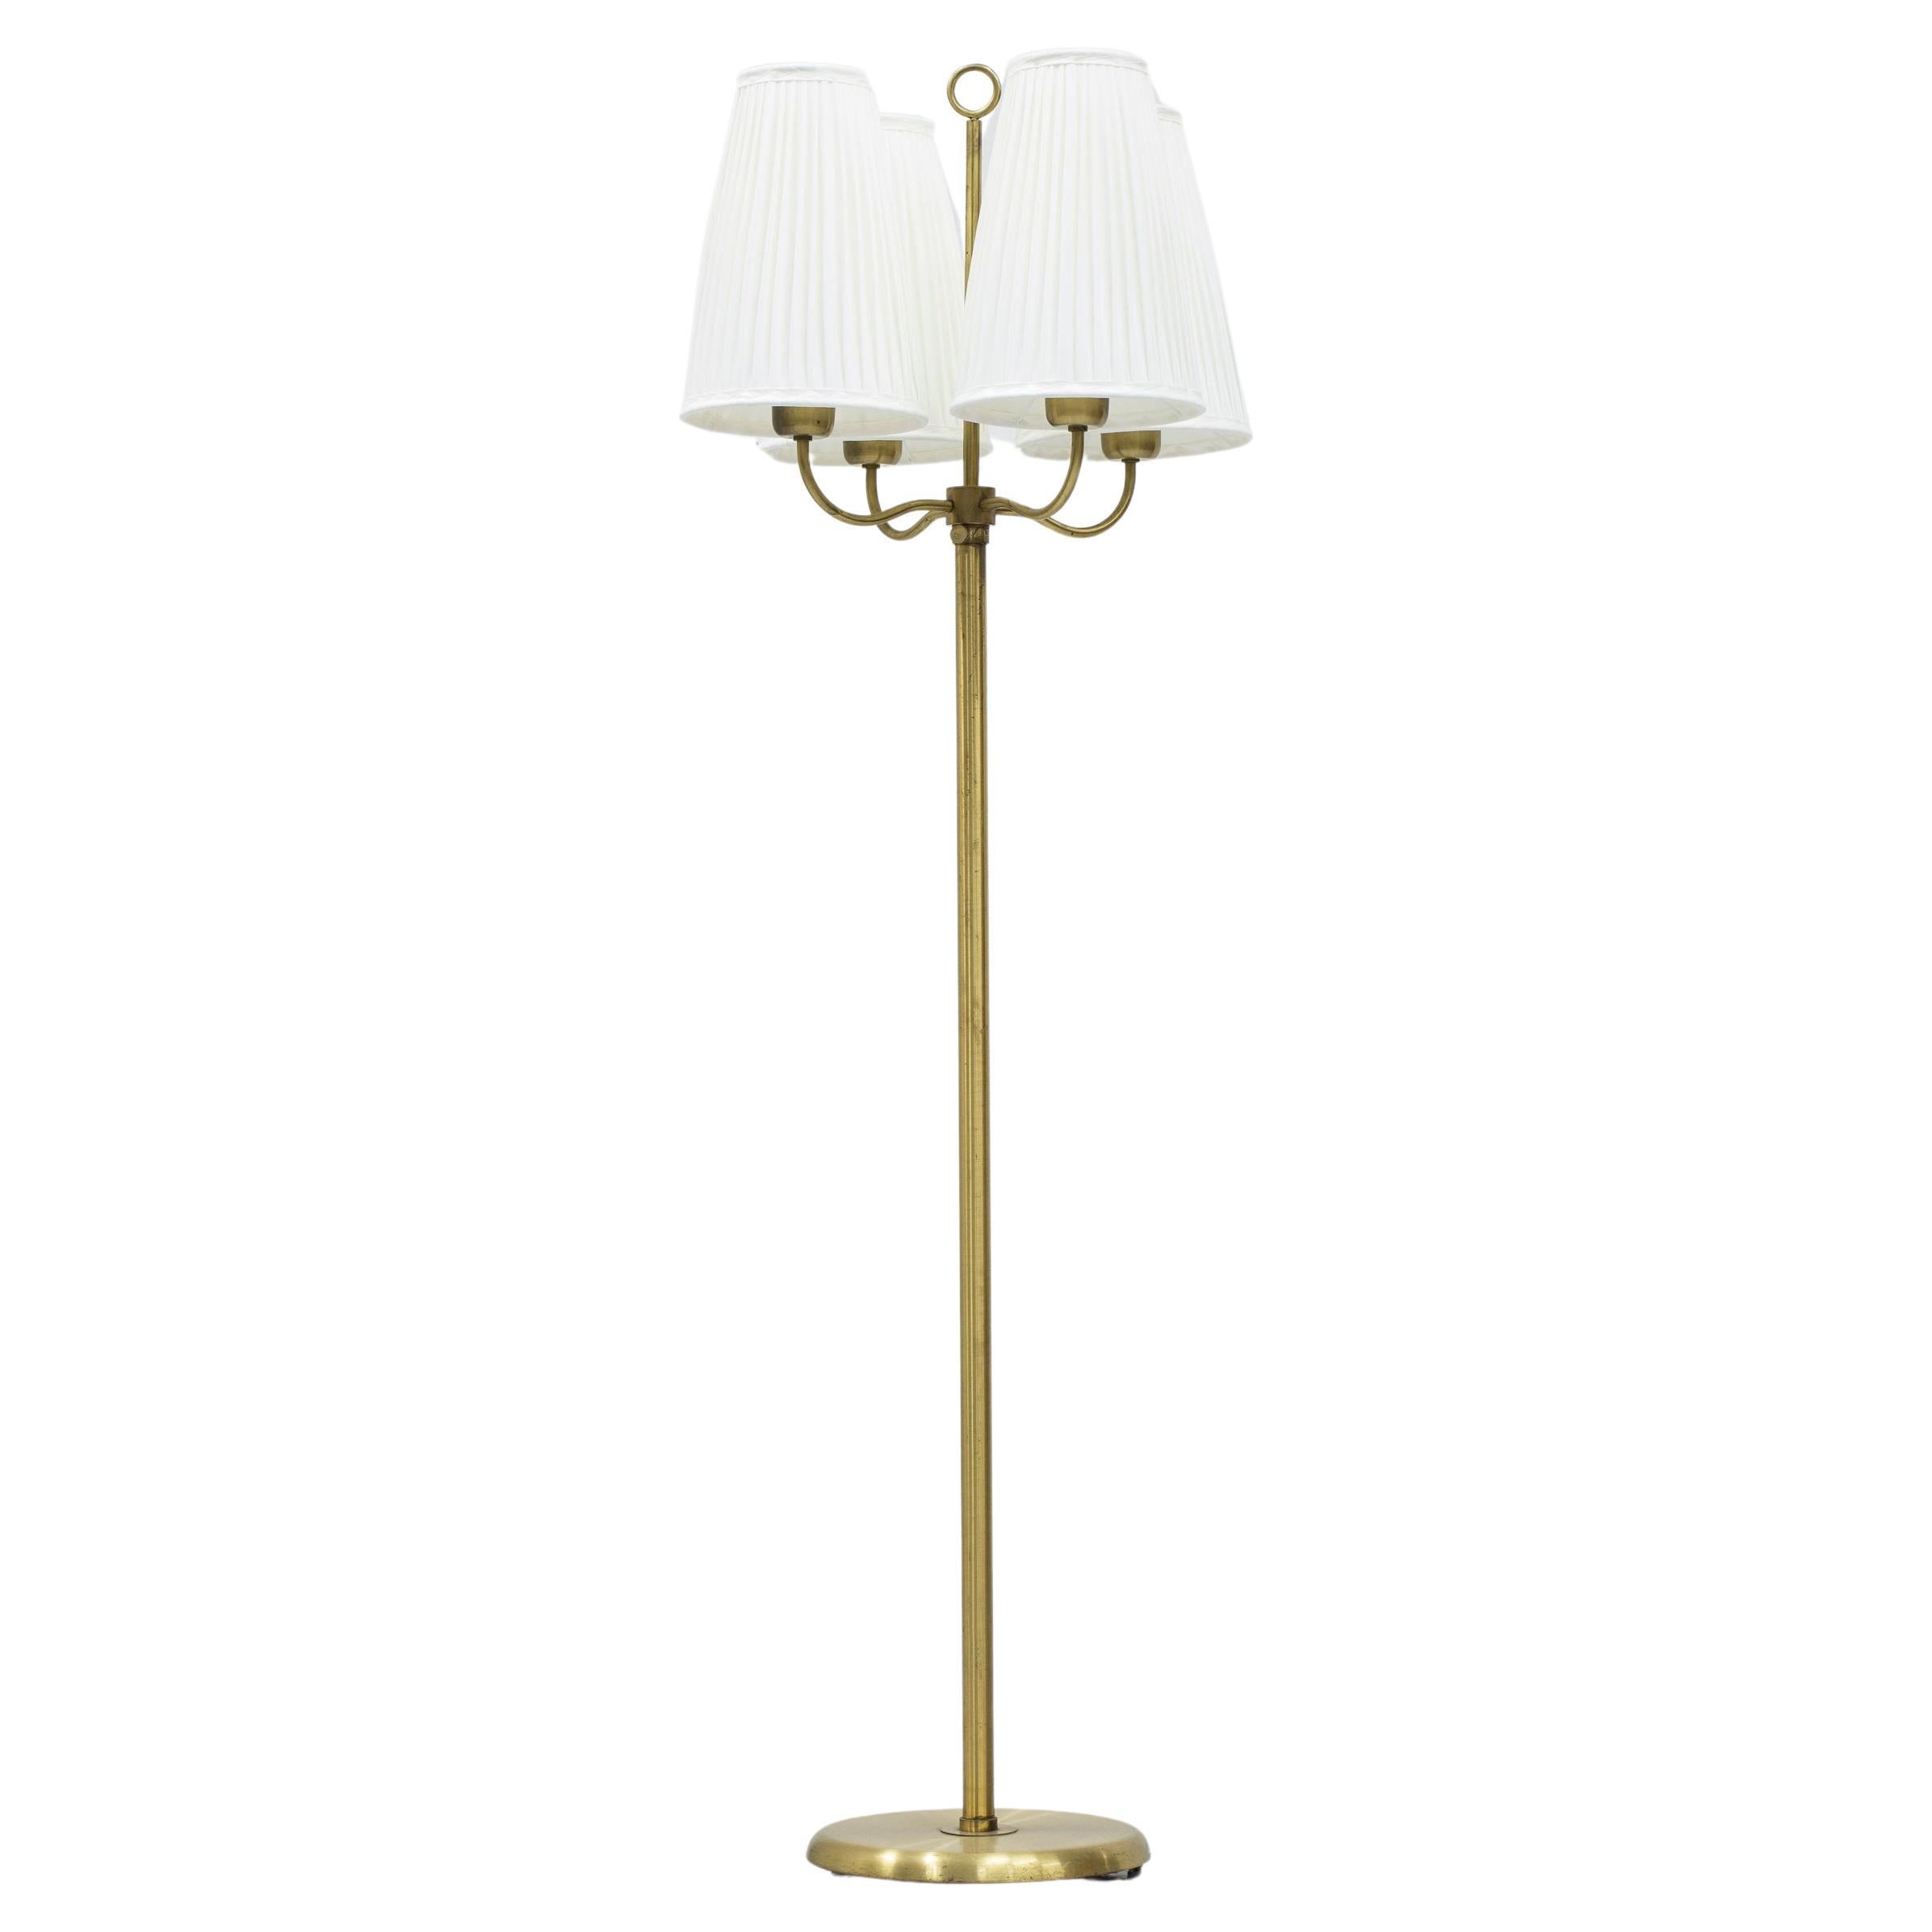 Swedish Modern floor lamp in brass in the manner of Josef Frank, Sweden, 1940s For Sale